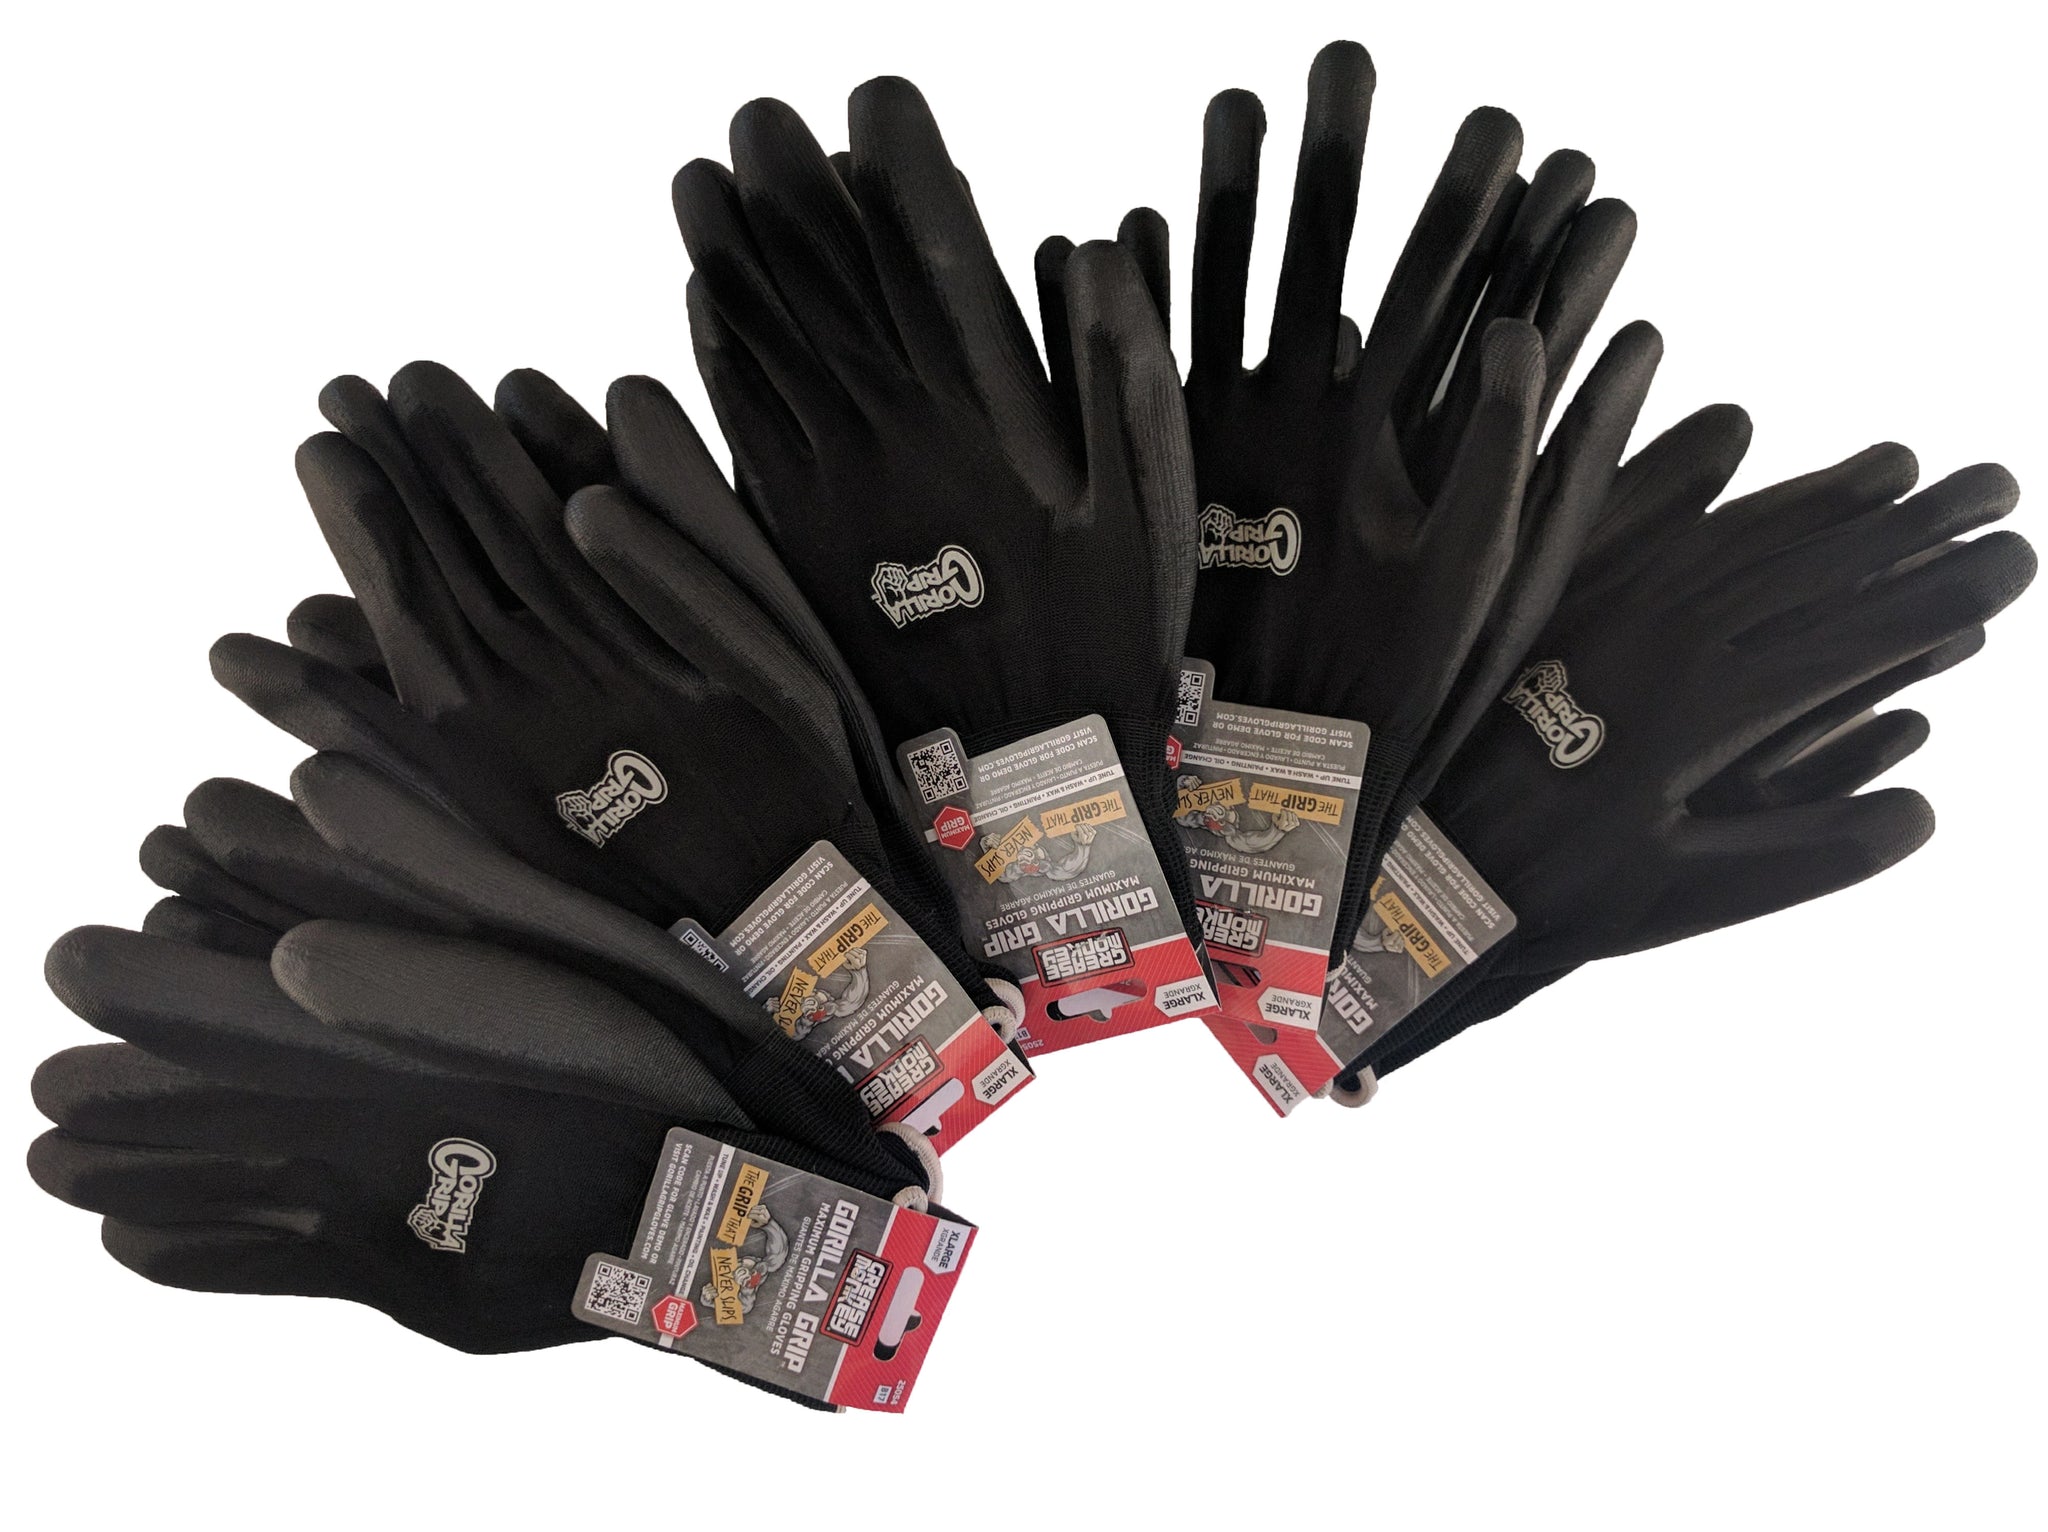 Grease Monkey Gorilla Grip Slip Resistant Gloves 5 Pack, Large, 25057-25 